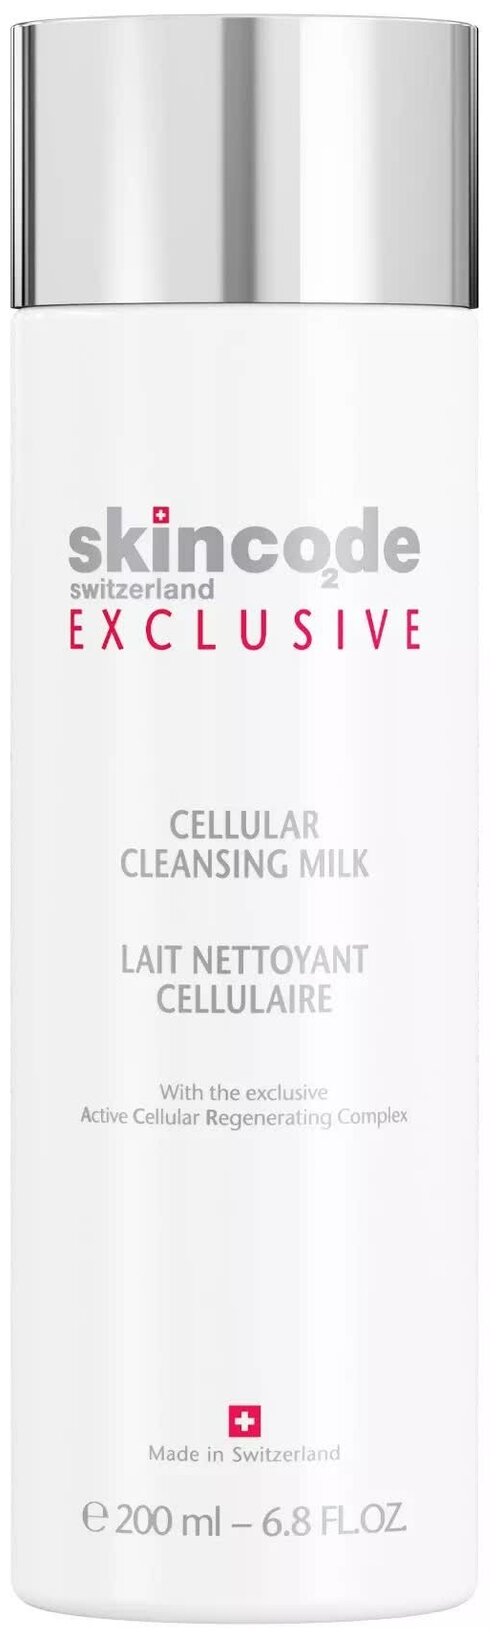 Молочко Skincode Exclusive Cellular очищающее, 200 мл